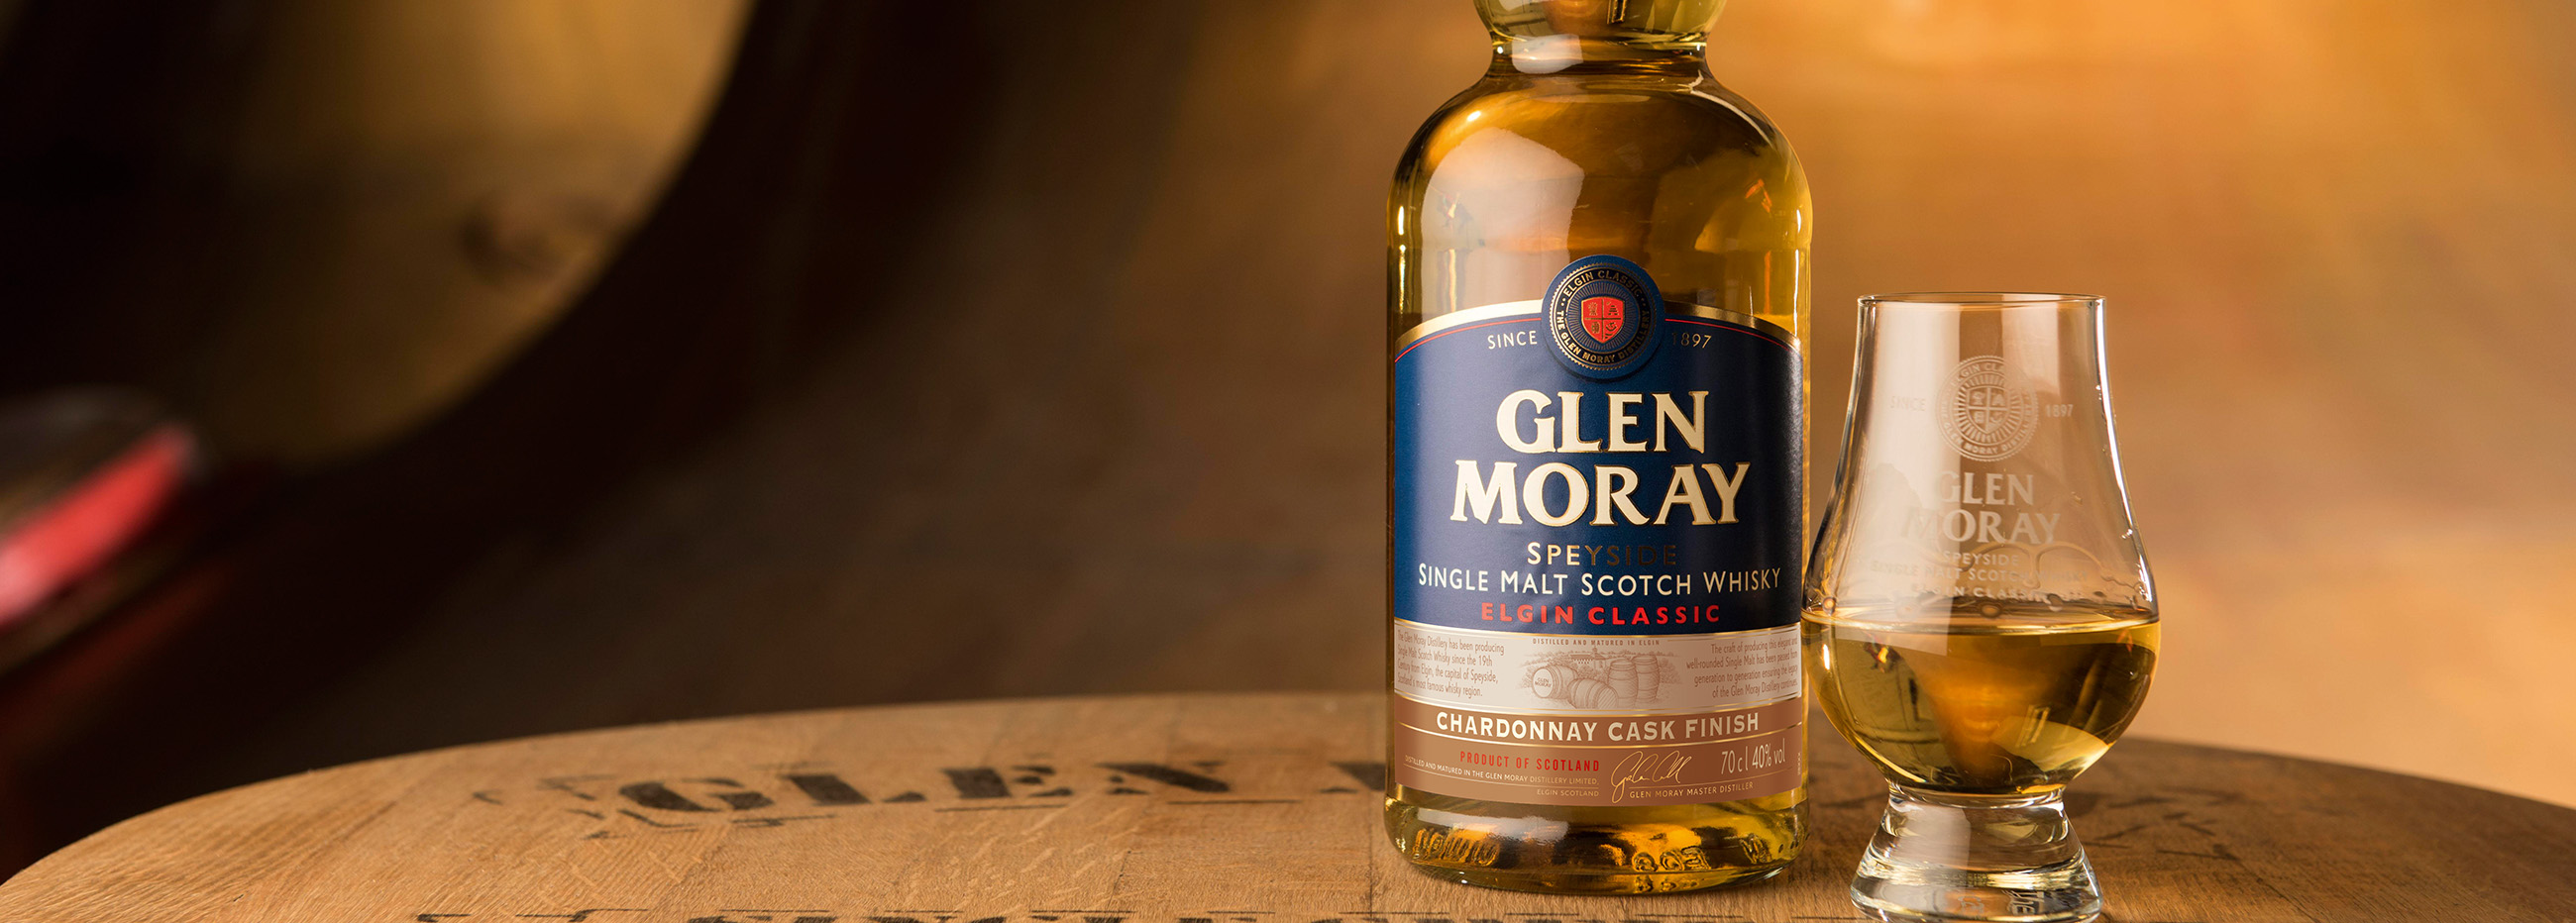 Glen Moray Does A Twist On Chardonnay With Its New Single Malt Scotch Whisky